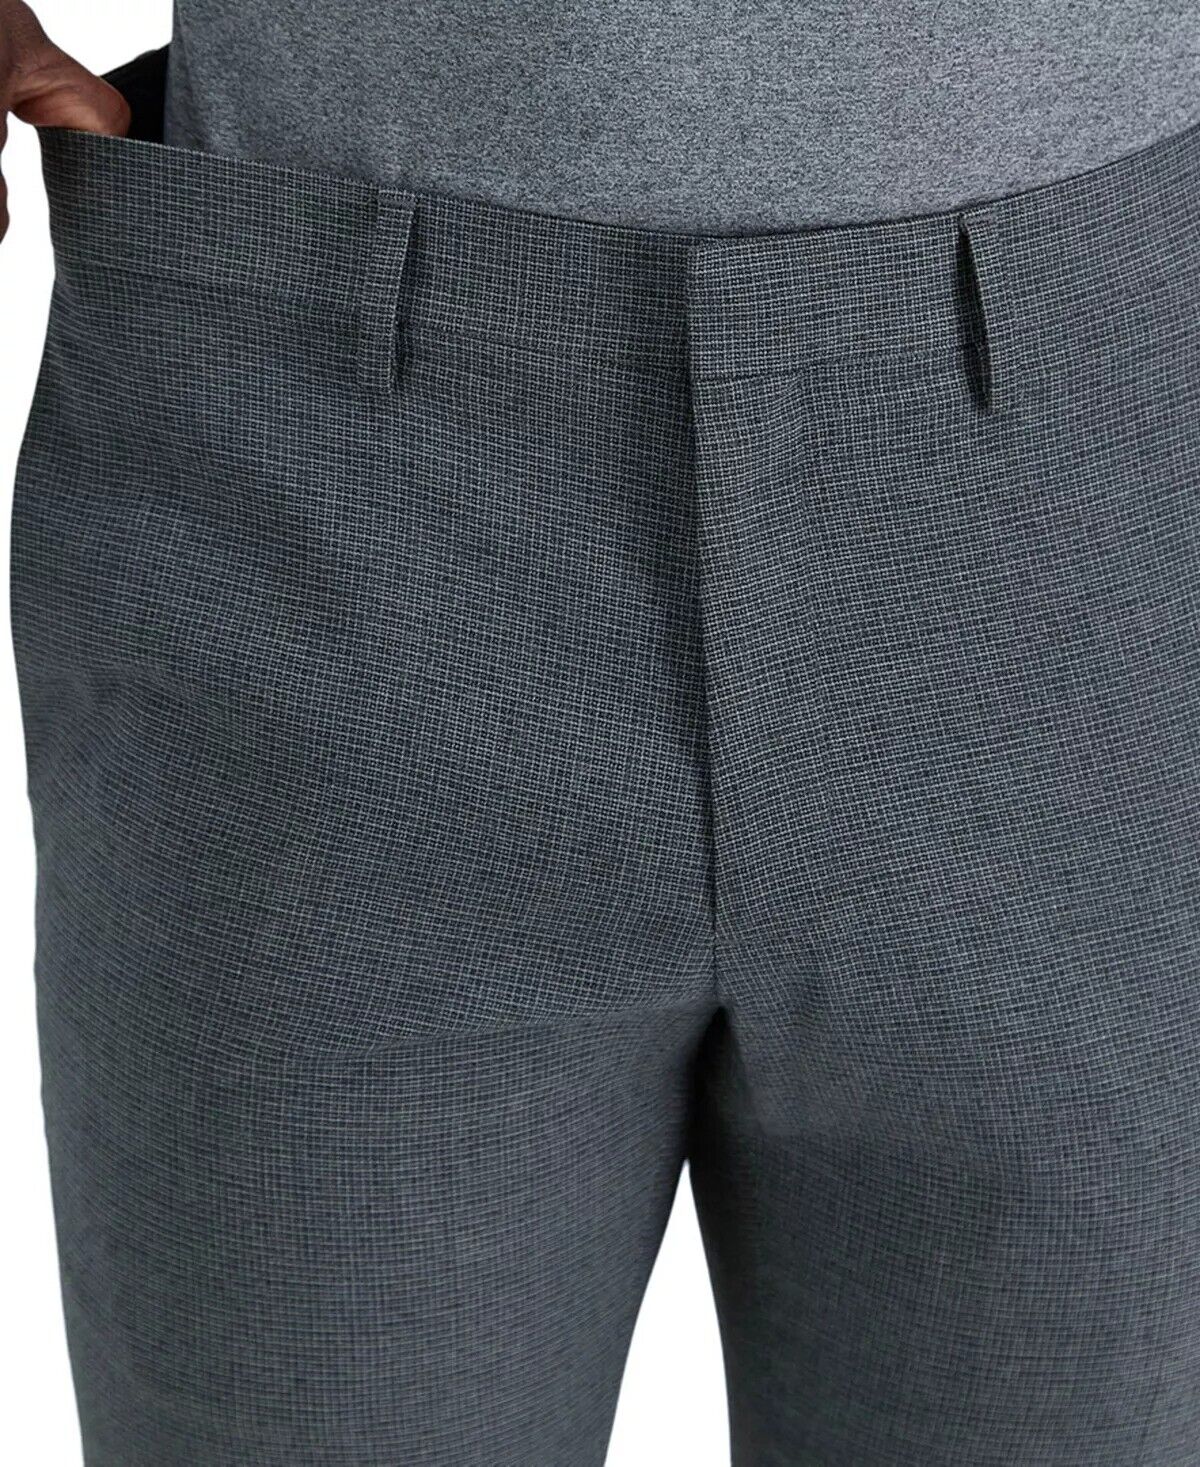 KENNETH COLE Men's Slim-Fit Stretch Dress Pants 38 x 30 Grey Windowpane